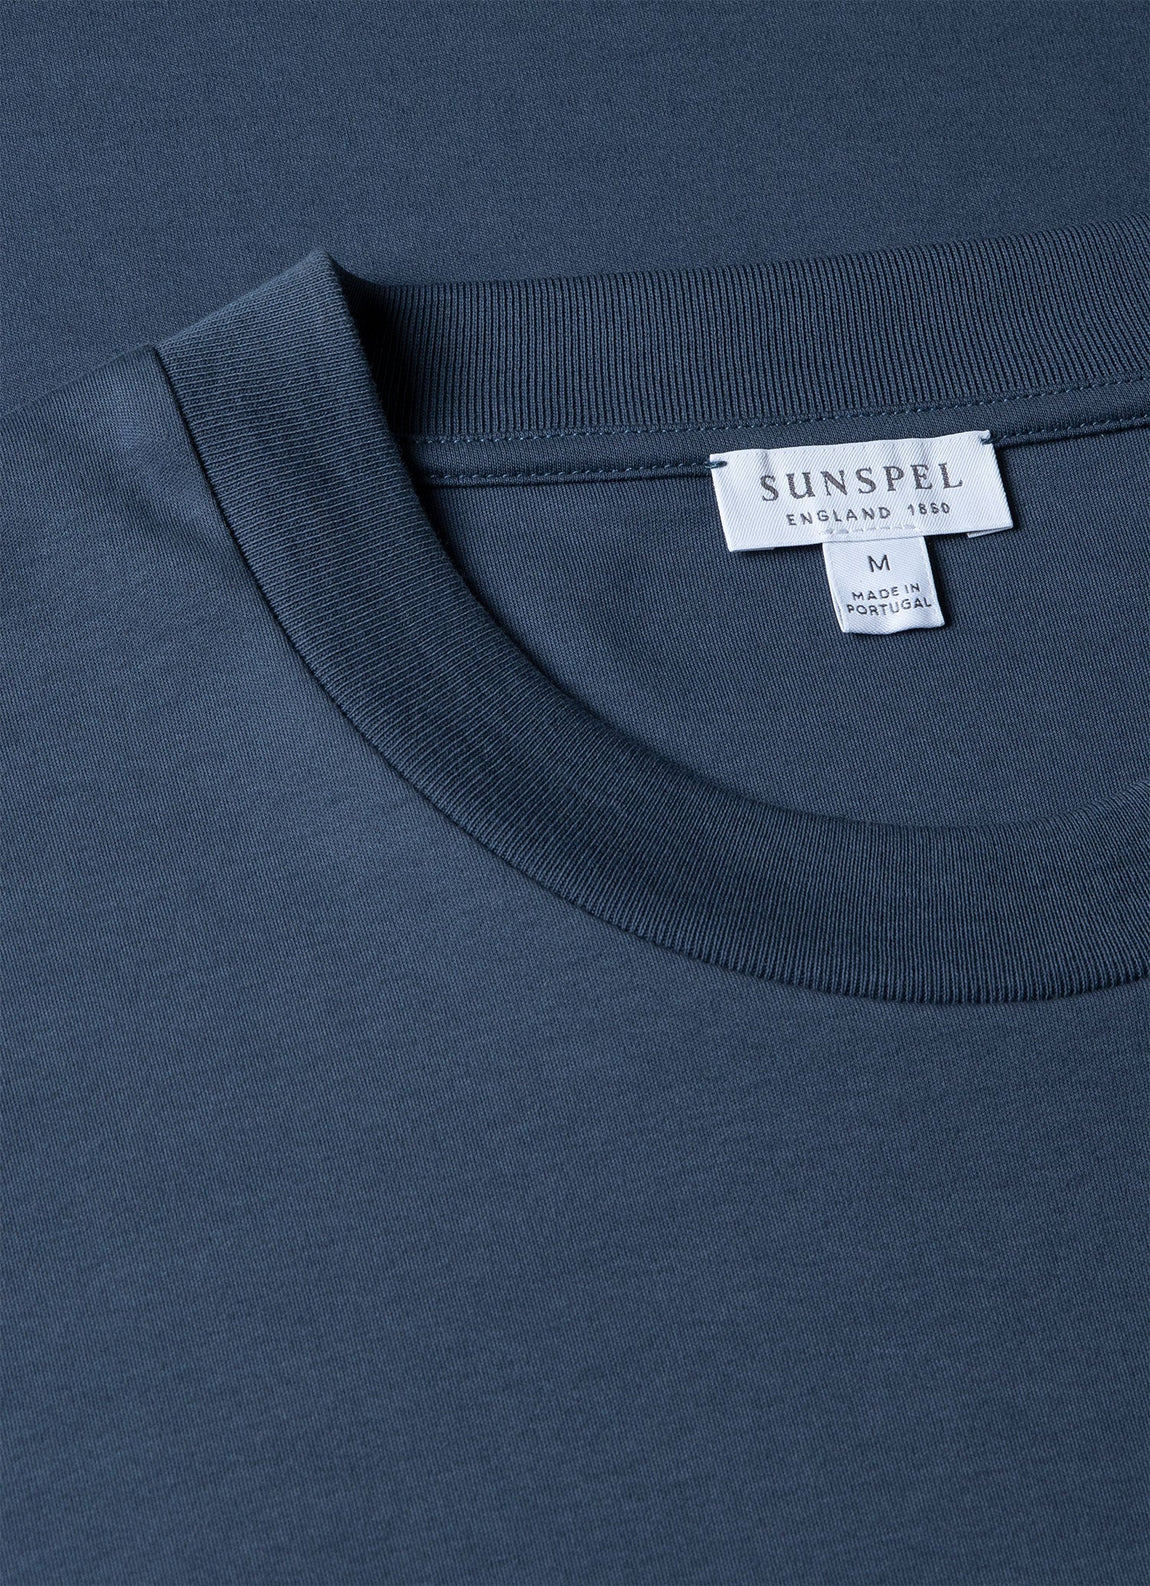 Men's Relaxed Fit Heavyweight T-shirt in Slate Blue | Sunspel